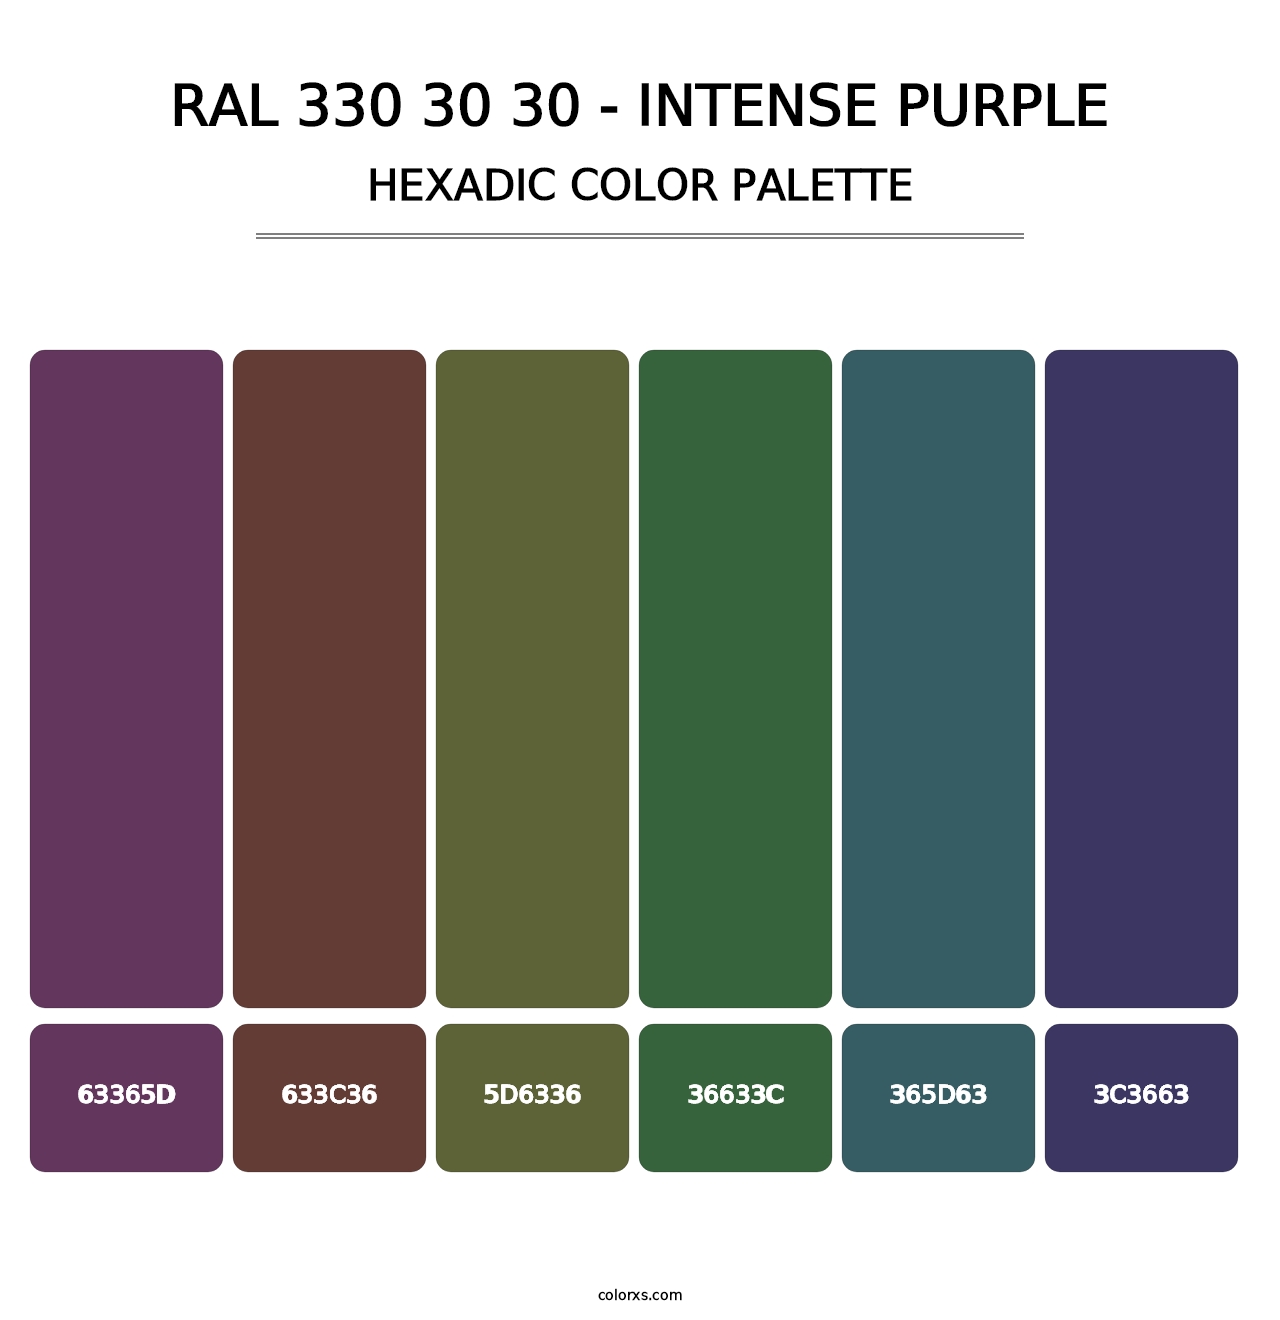 RAL 330 30 30 - Intense Purple - Hexadic Color Palette